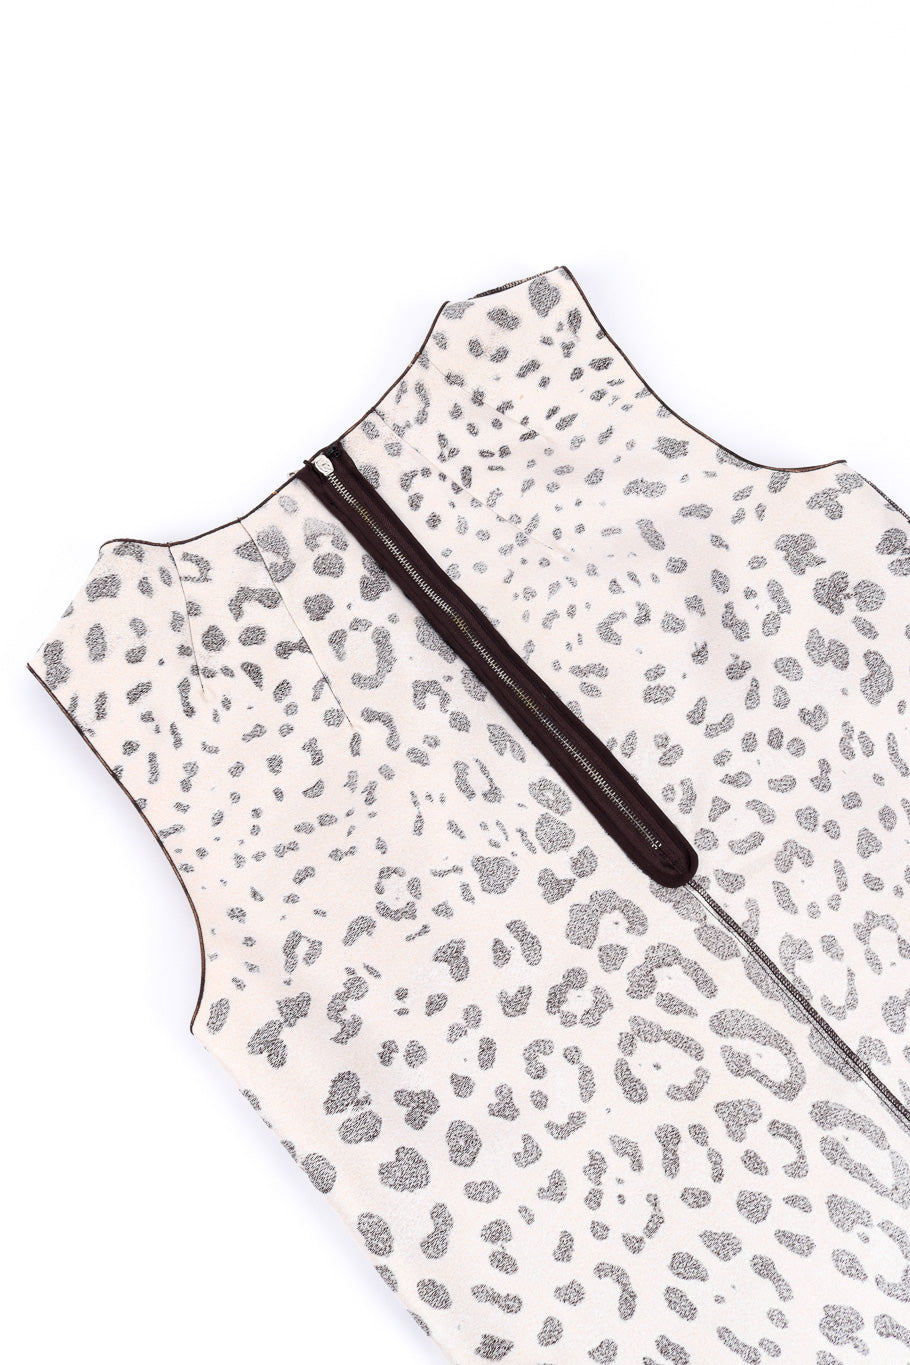 Dolce & Gabbana Belted Leopard Mini Dress inside out @recessla